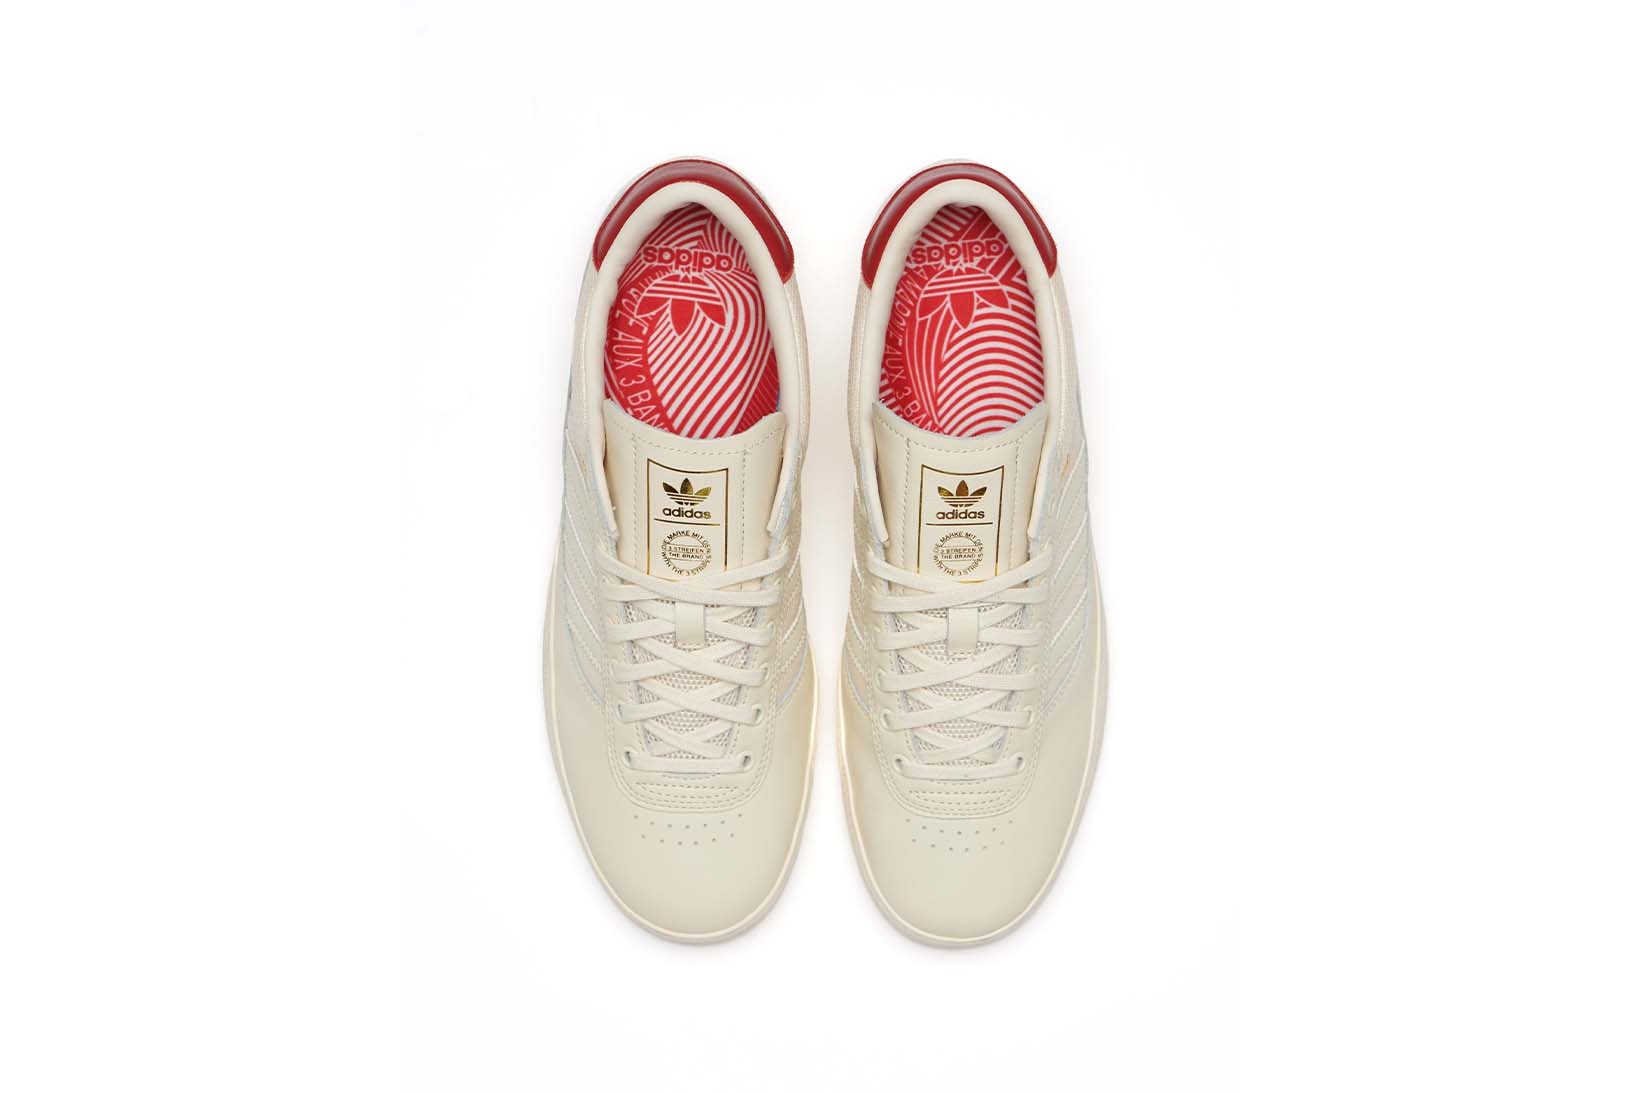 adidas skateboarding lucas puig indoor cream white GW3150 release info price